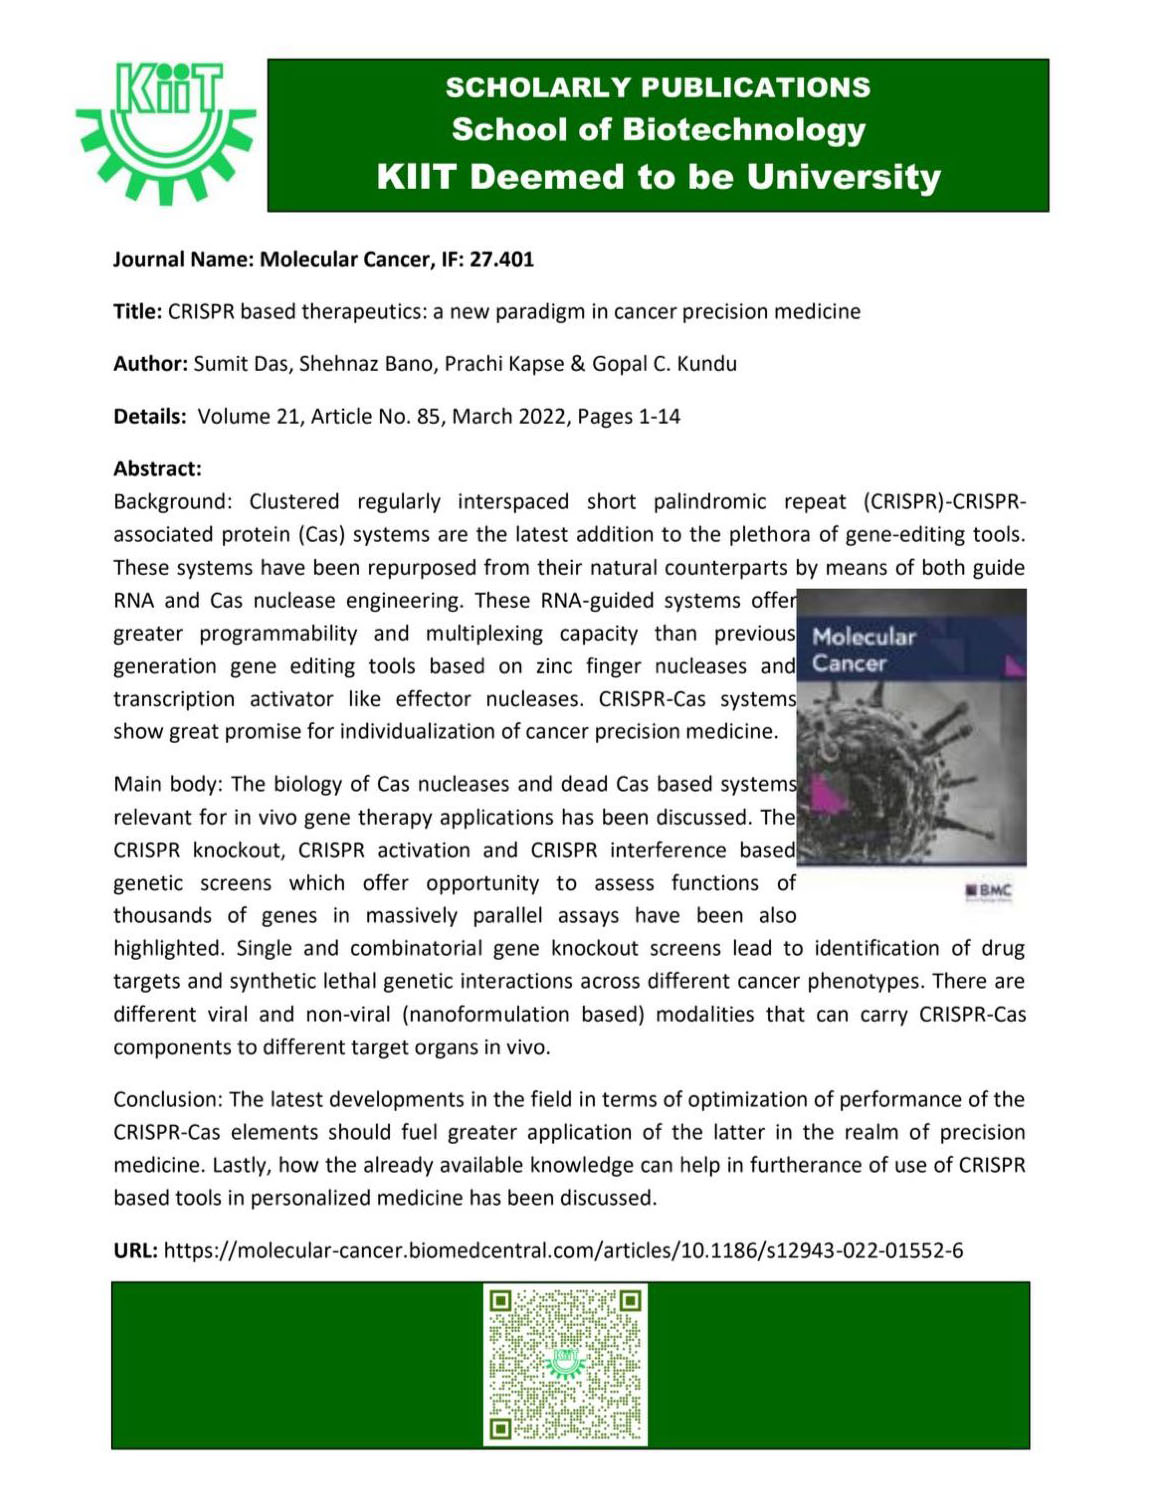 KIIT Scholarly Publications 2022